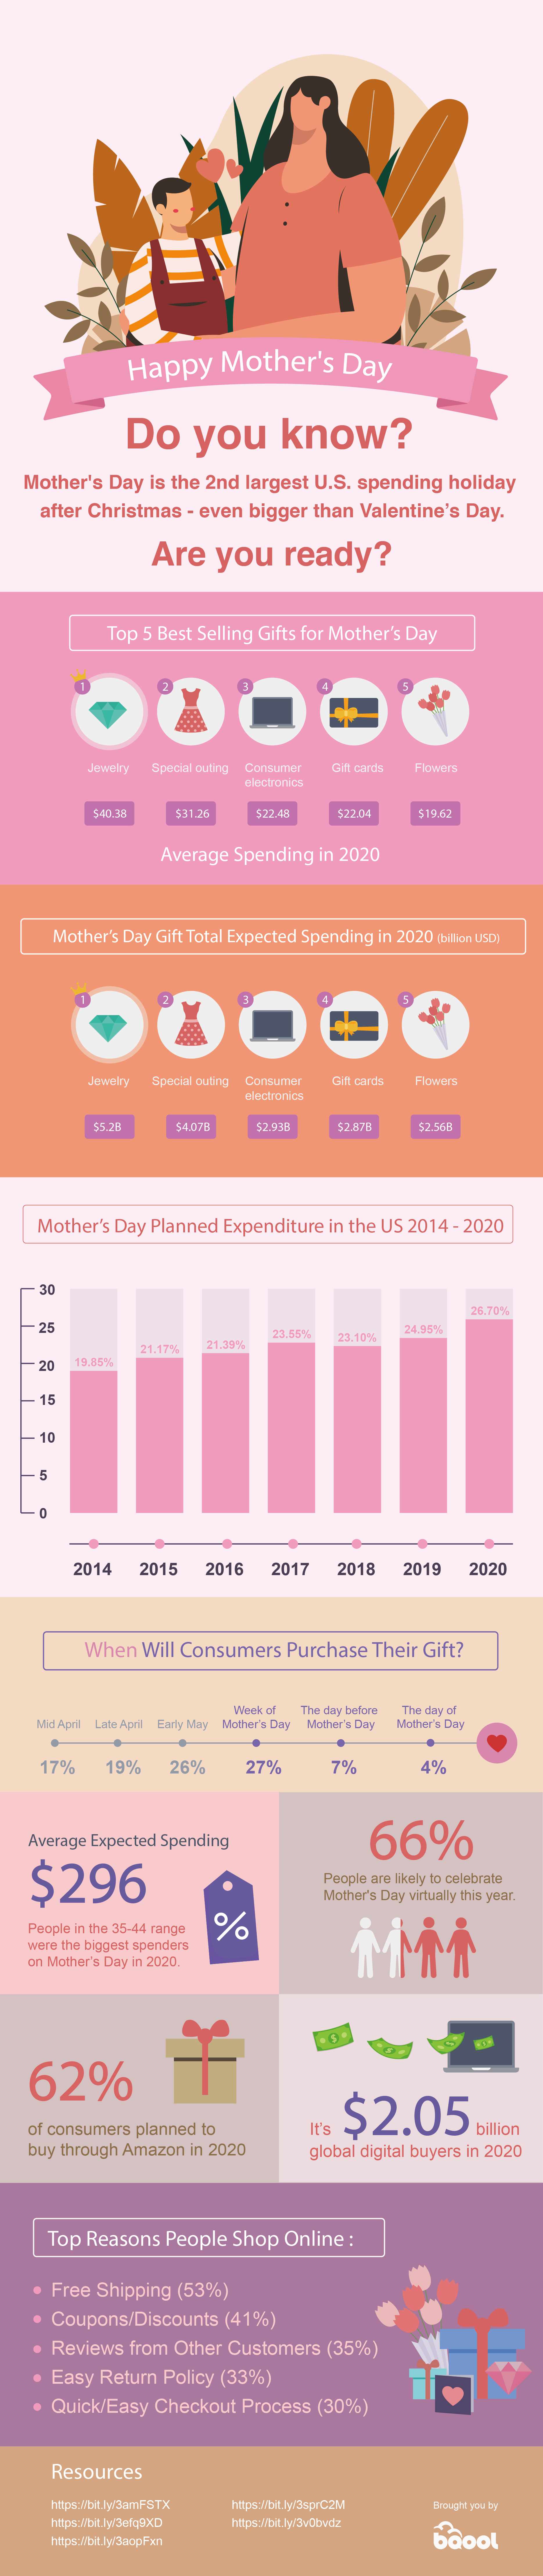 Mother's Day Online Spending Statistics